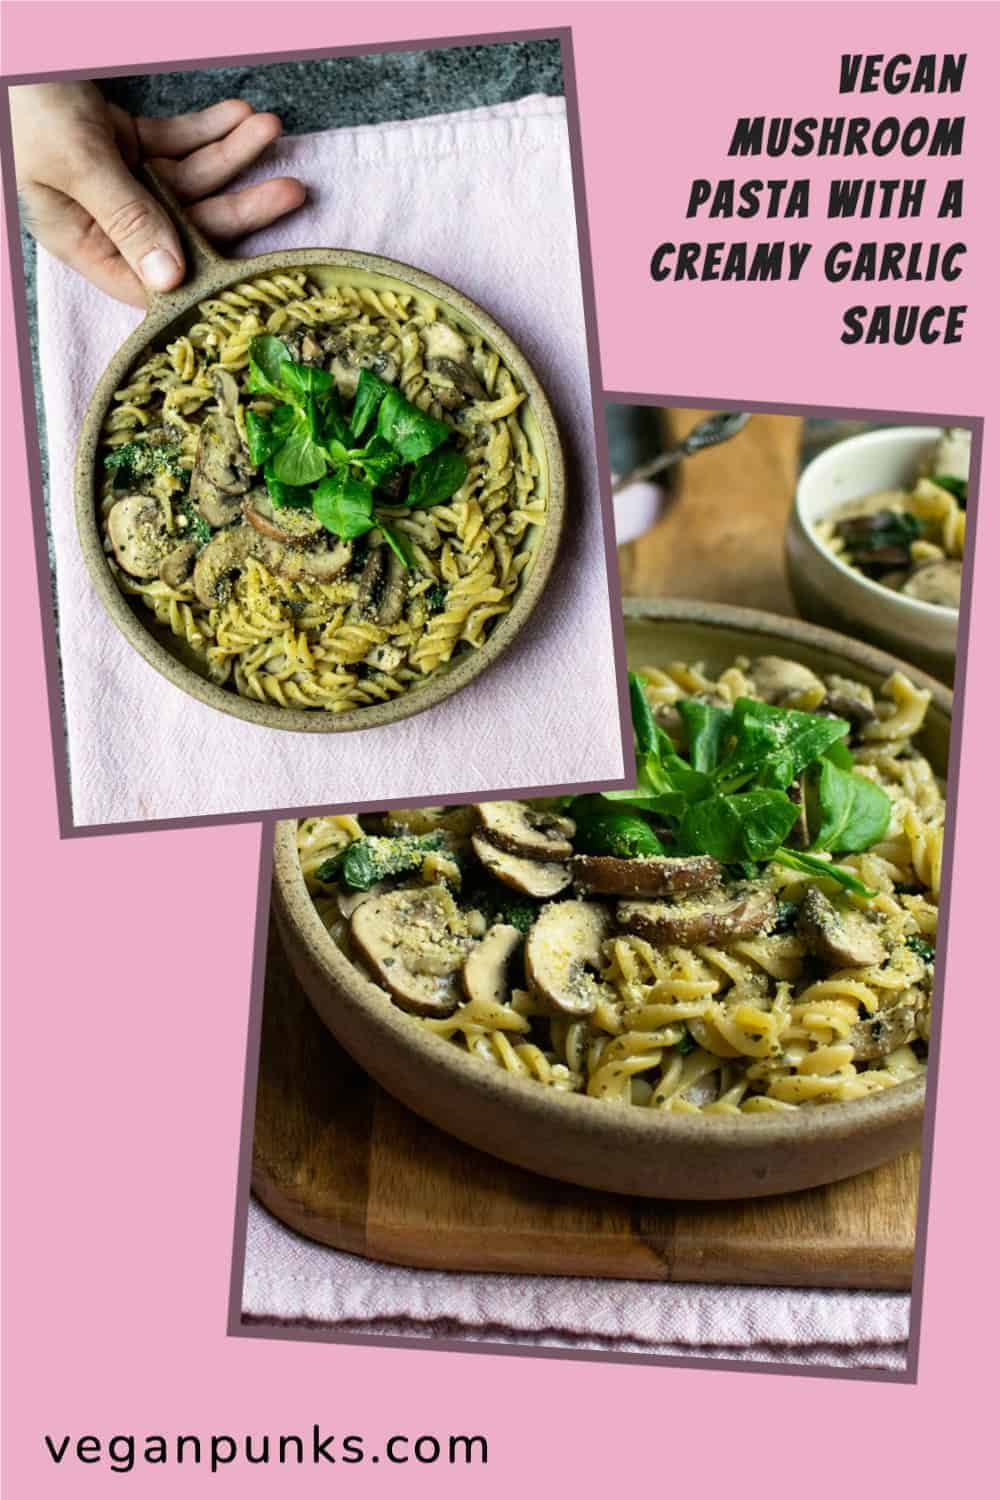 A Pinterest image for vegan mushroom pasta with a creamy garlic sauce